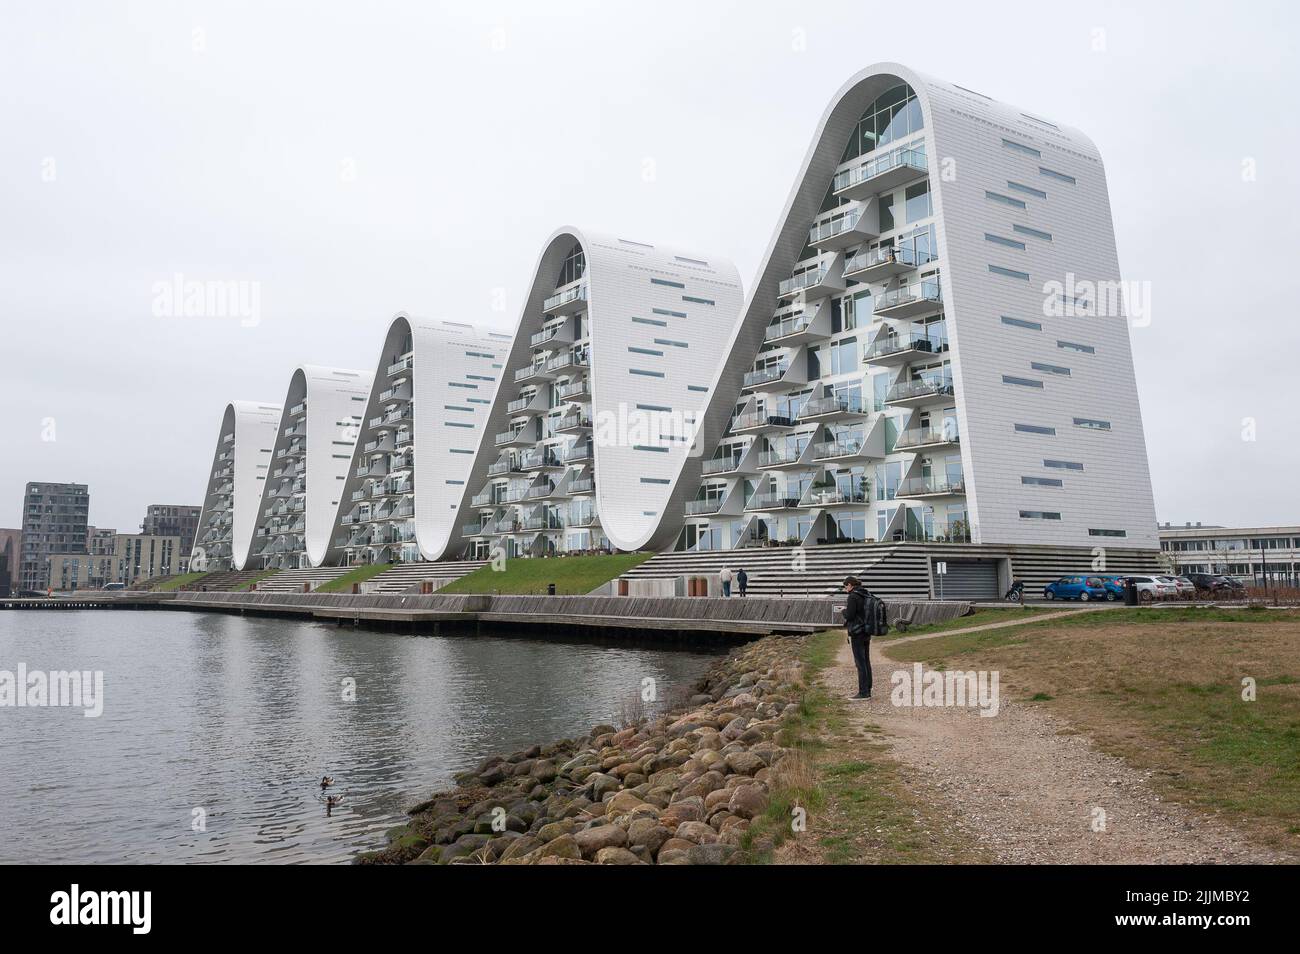 Bølgen, residential building complex in Vejle, Jutland Peninsula, Region of Southern Denmark Stock Photo